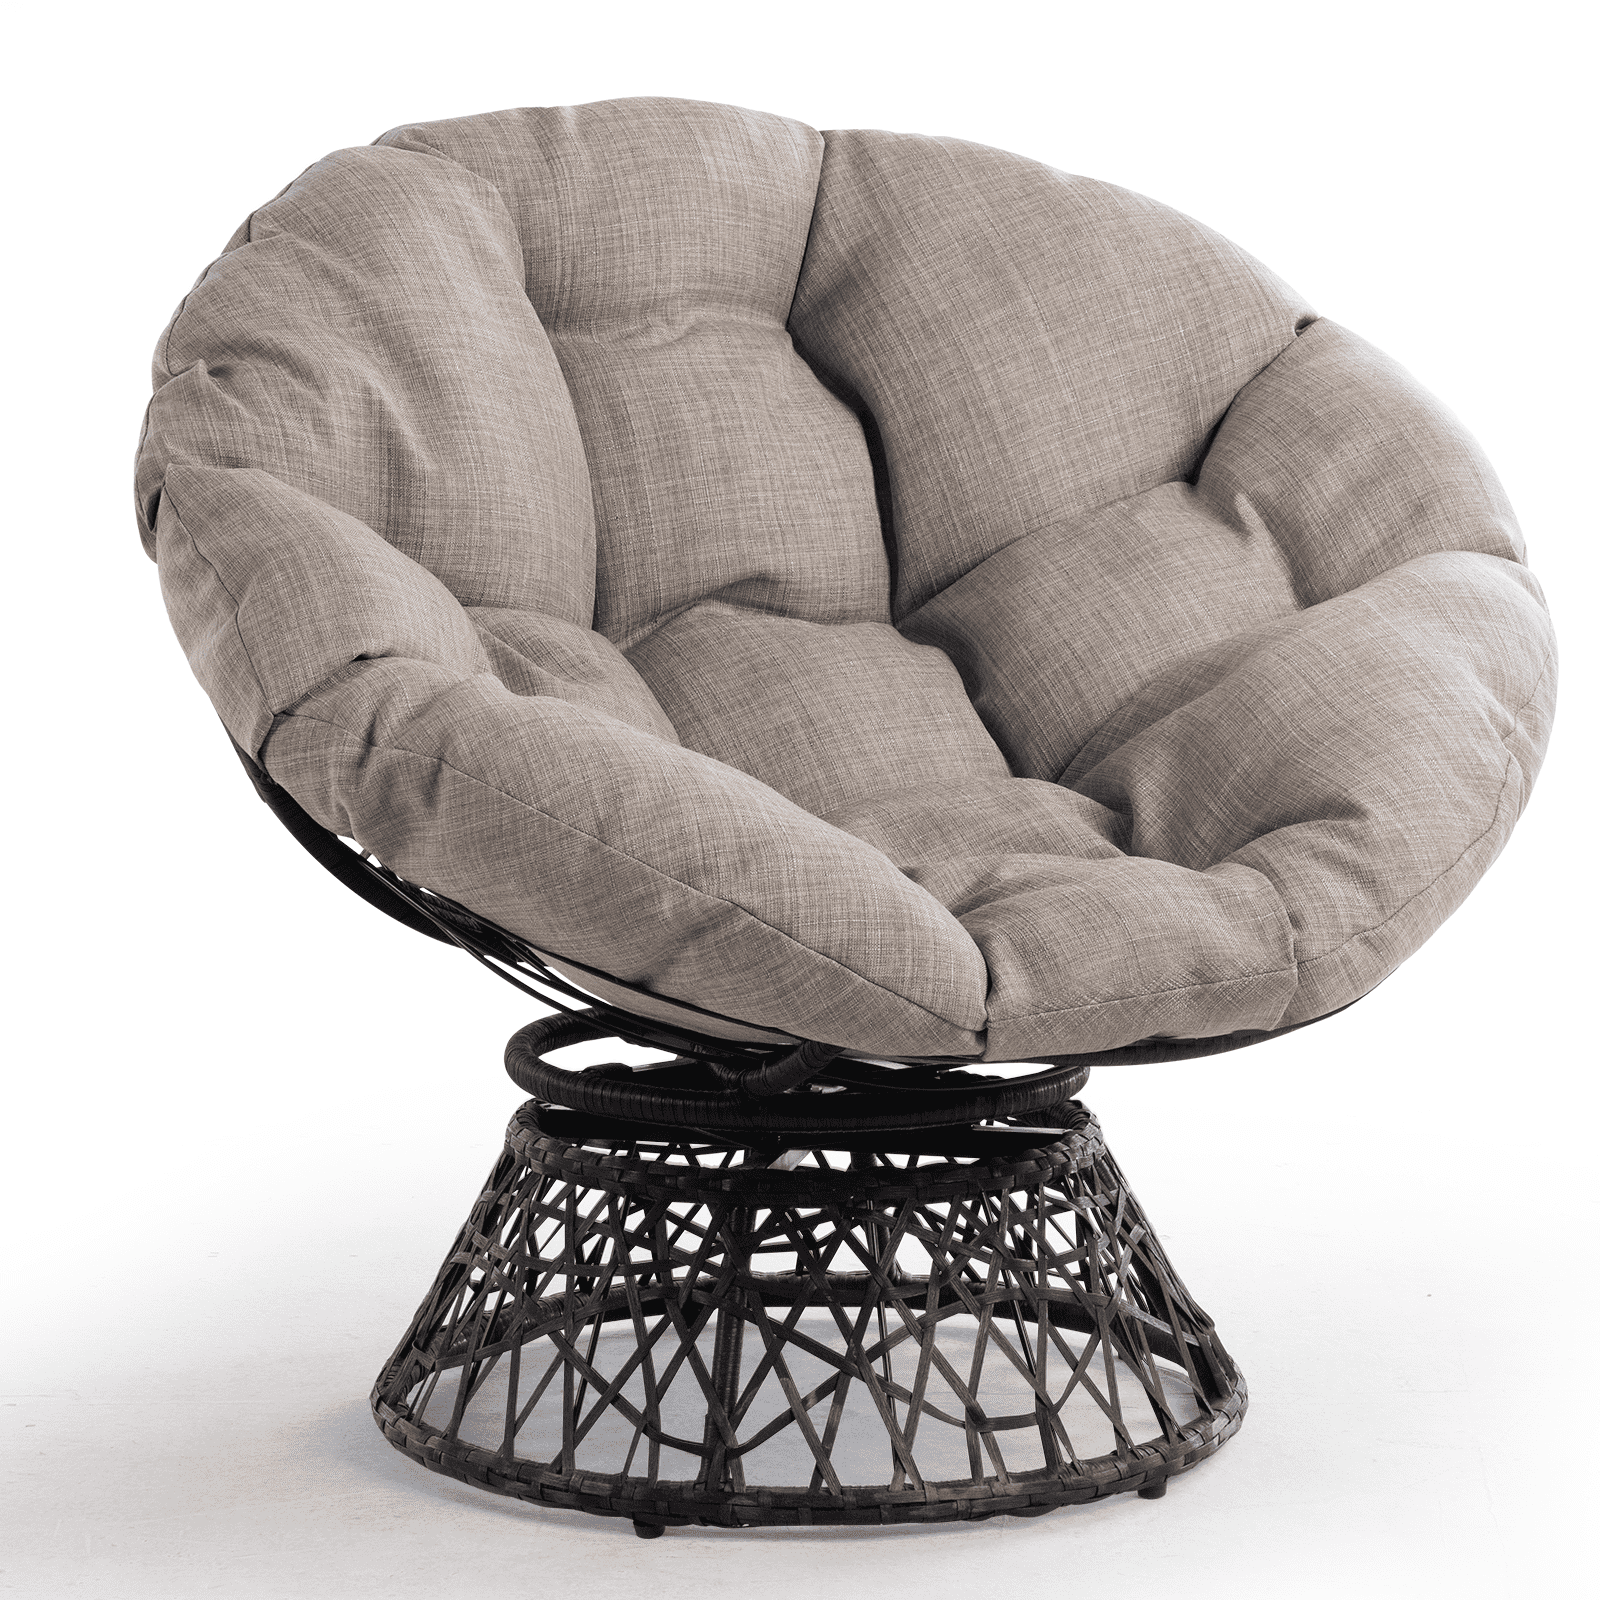 Bme 360 Swivel Comfy Papasan Chair with Fabric Cushion, Sturdy Metal Frame (Cream Vanilla - Black Frame)